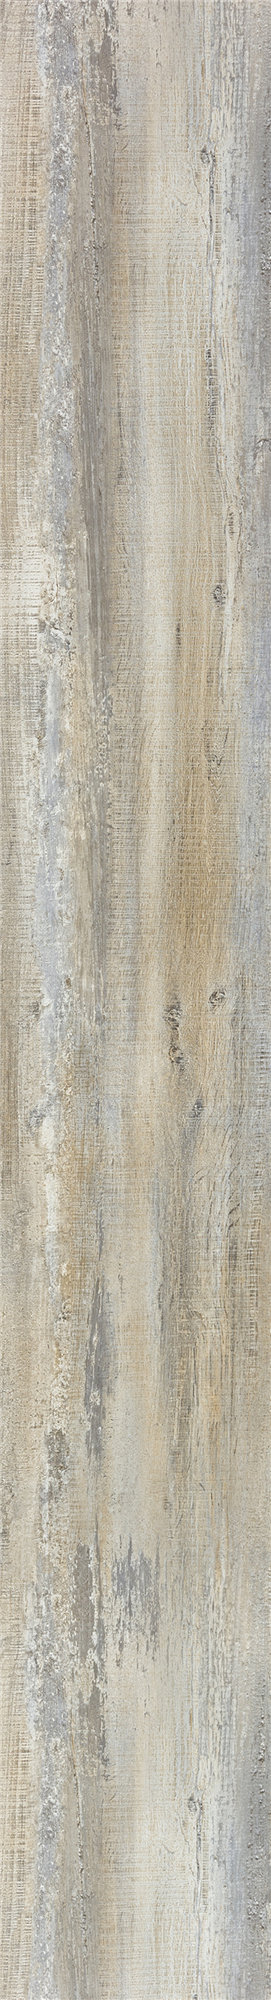 Hanflor Wood Look Vinyl Floor Designs Express LVT Low VOC Luxury Vinyl Plank | Easy Click HIF 20487